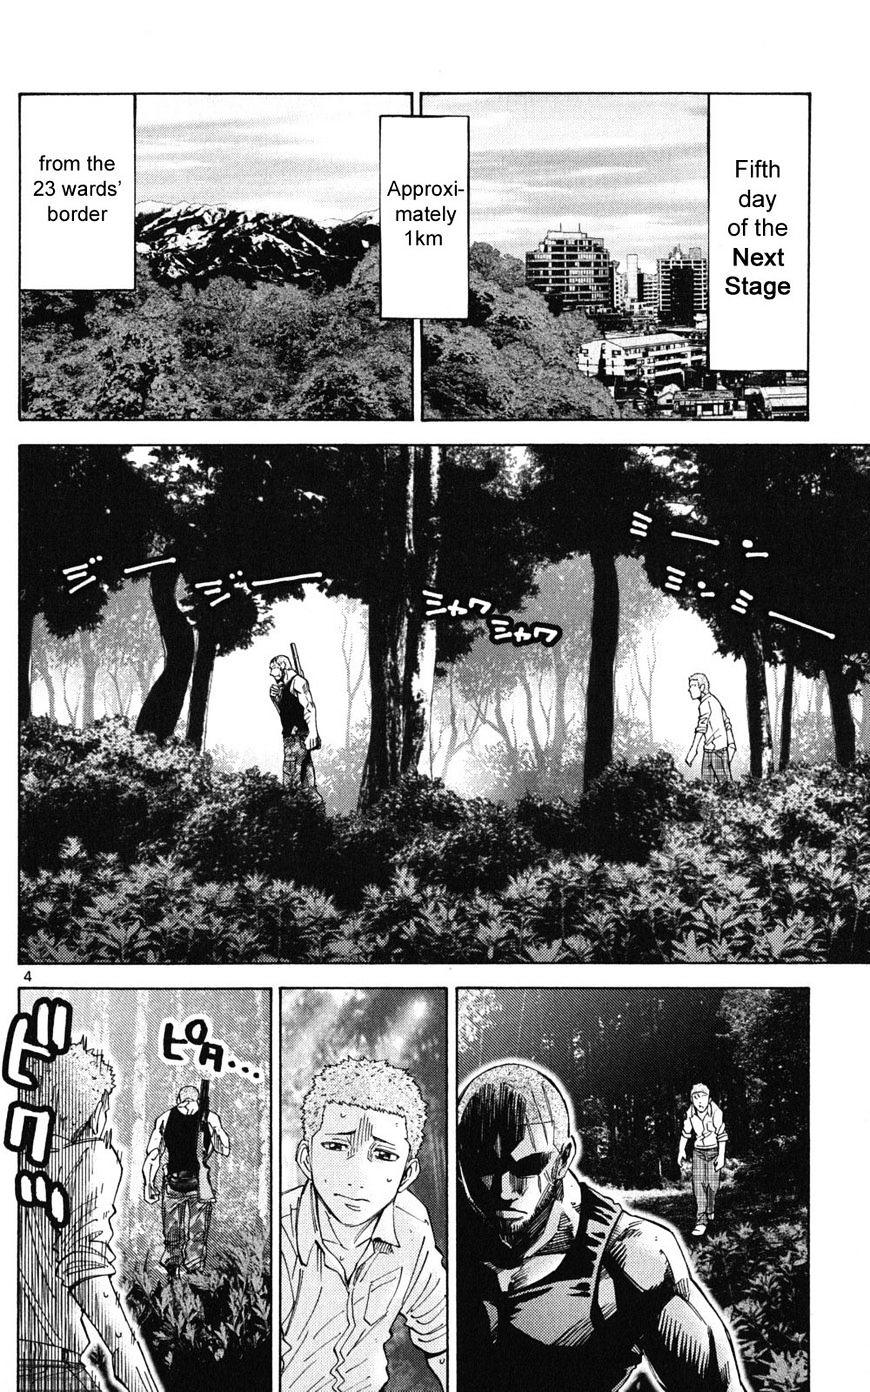 Imawa No Kuni No Alice Chapter 49.2 : Side Story 5 - King Of Spades (2) page 4 - Mangakakalot